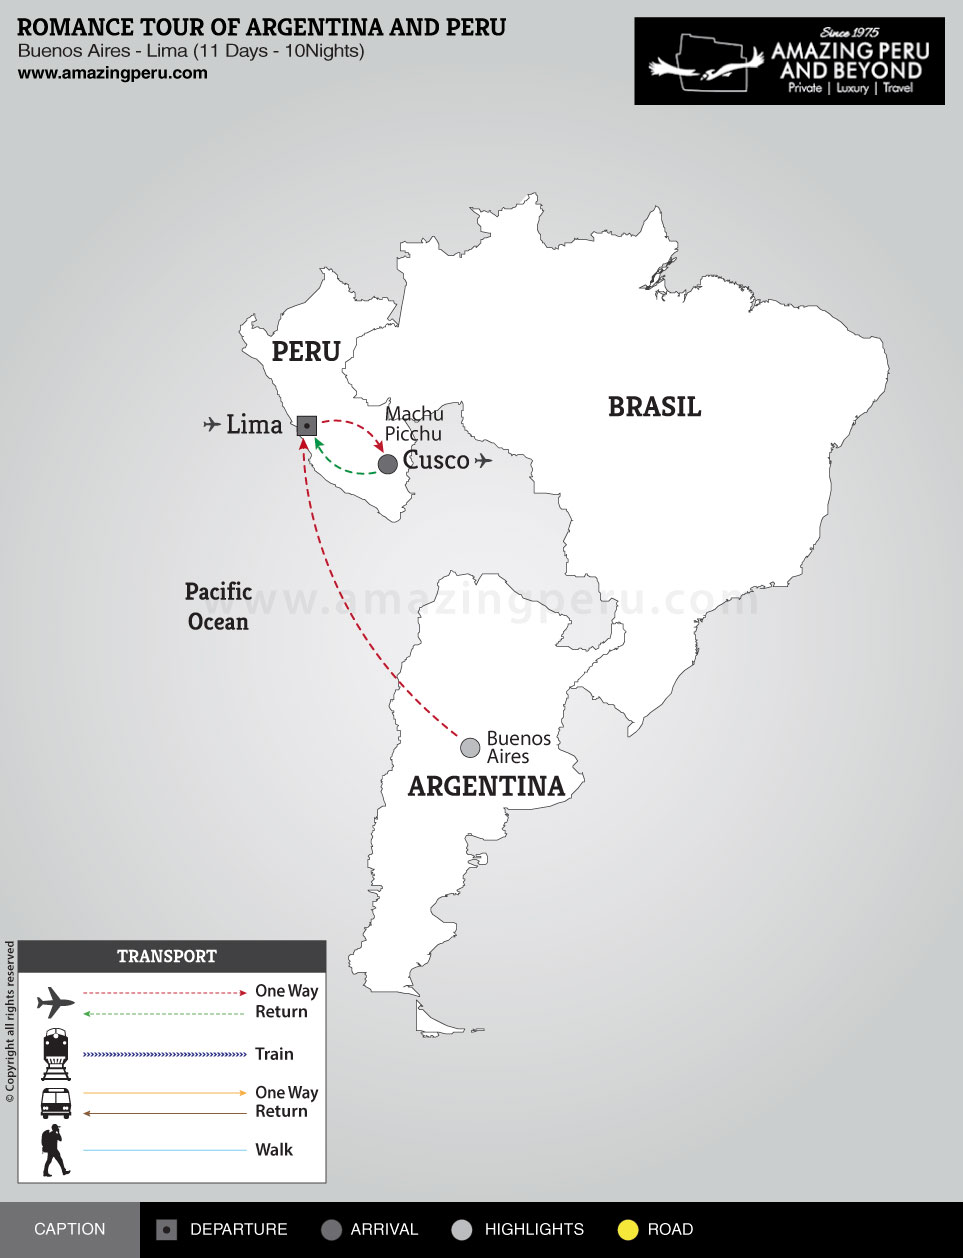 Romance Tour of Argentina and Peru - 11 days / 10 nights.